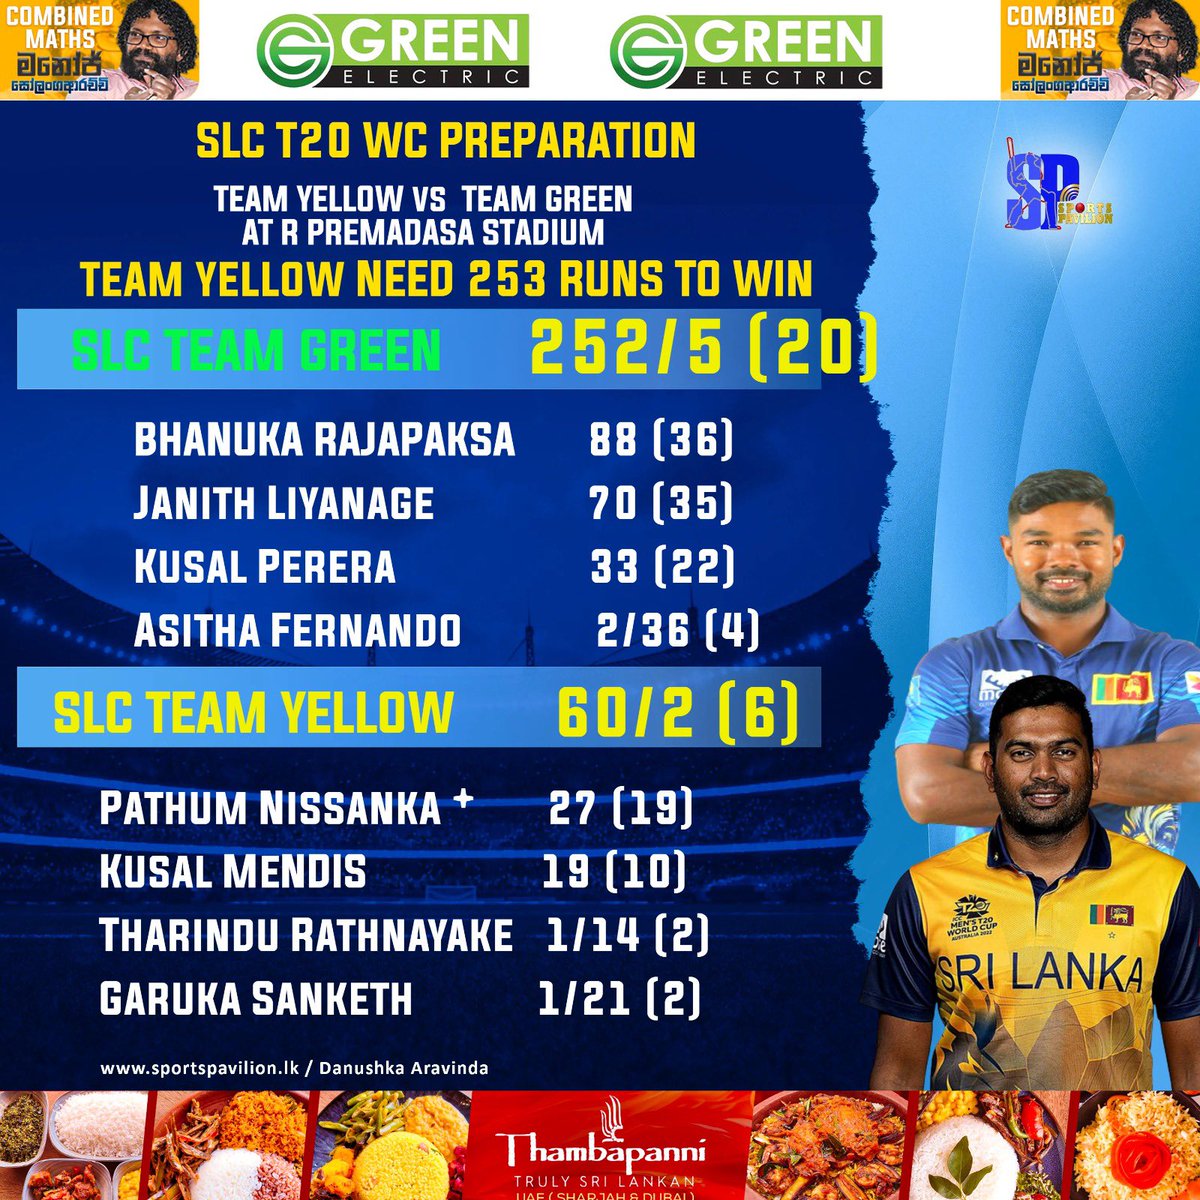 Team Yellow need another 193  runs in 14 Overs to win 

#sportspavilionlk #T20WorldCup #BhanukaRajapaksa #danushkaaravinda